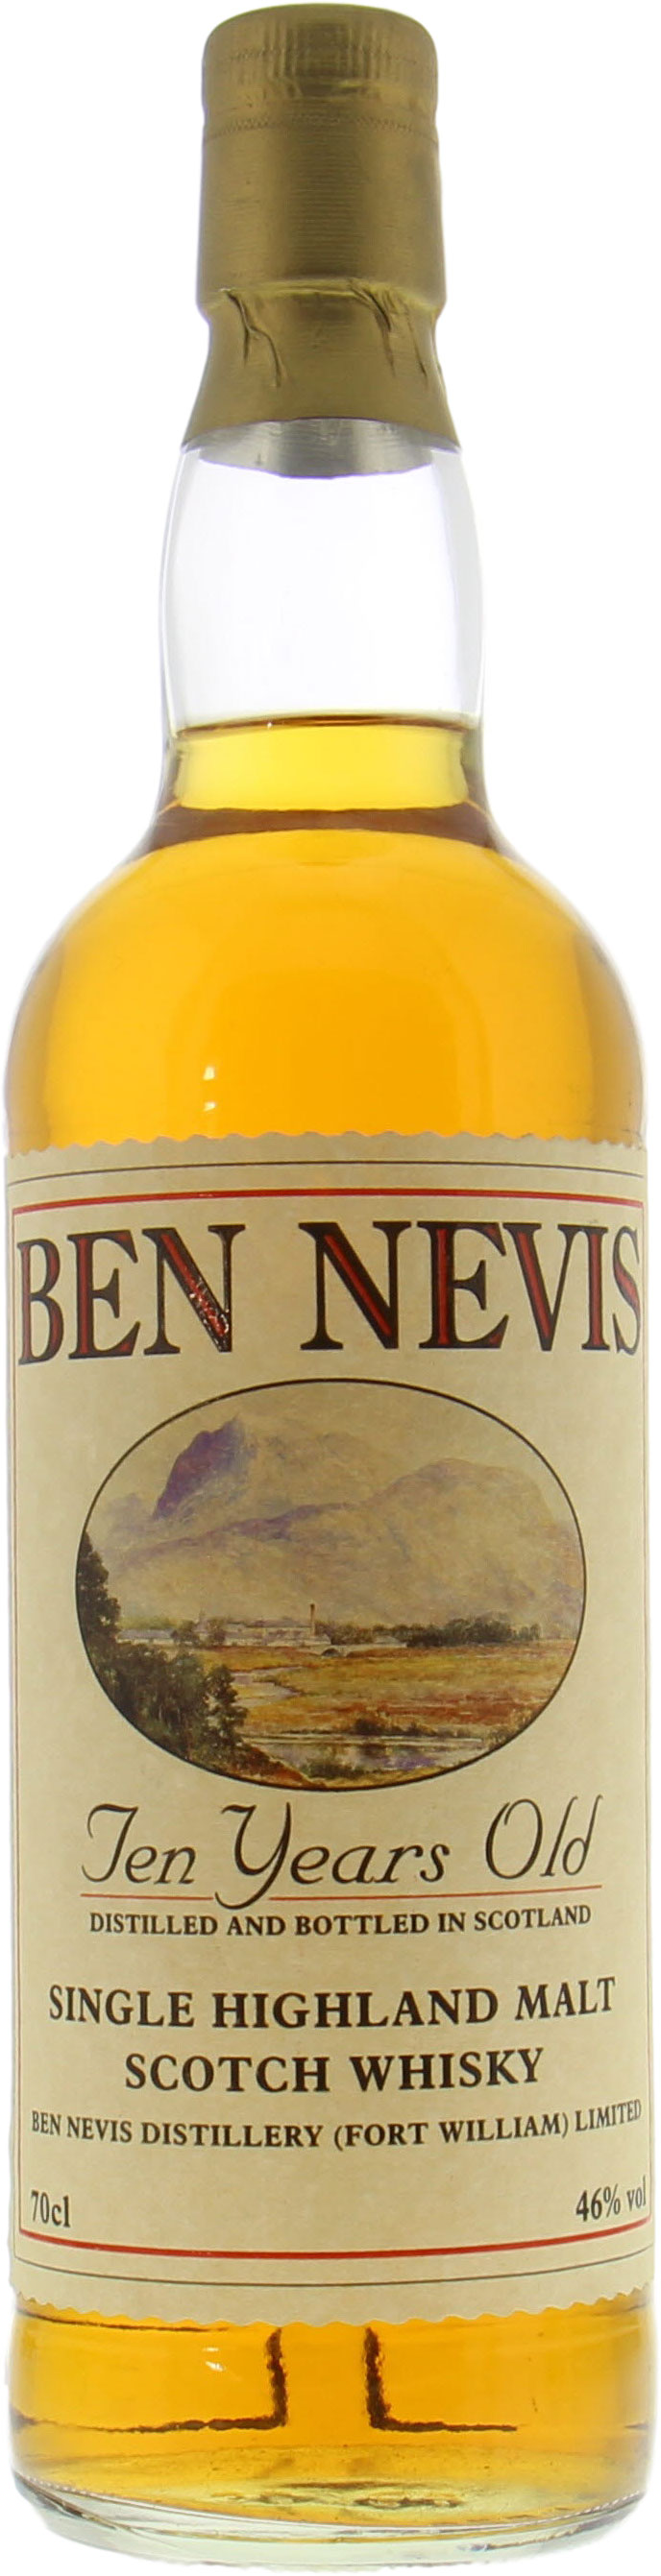 Ben Nevis - 10 years old 46% NV